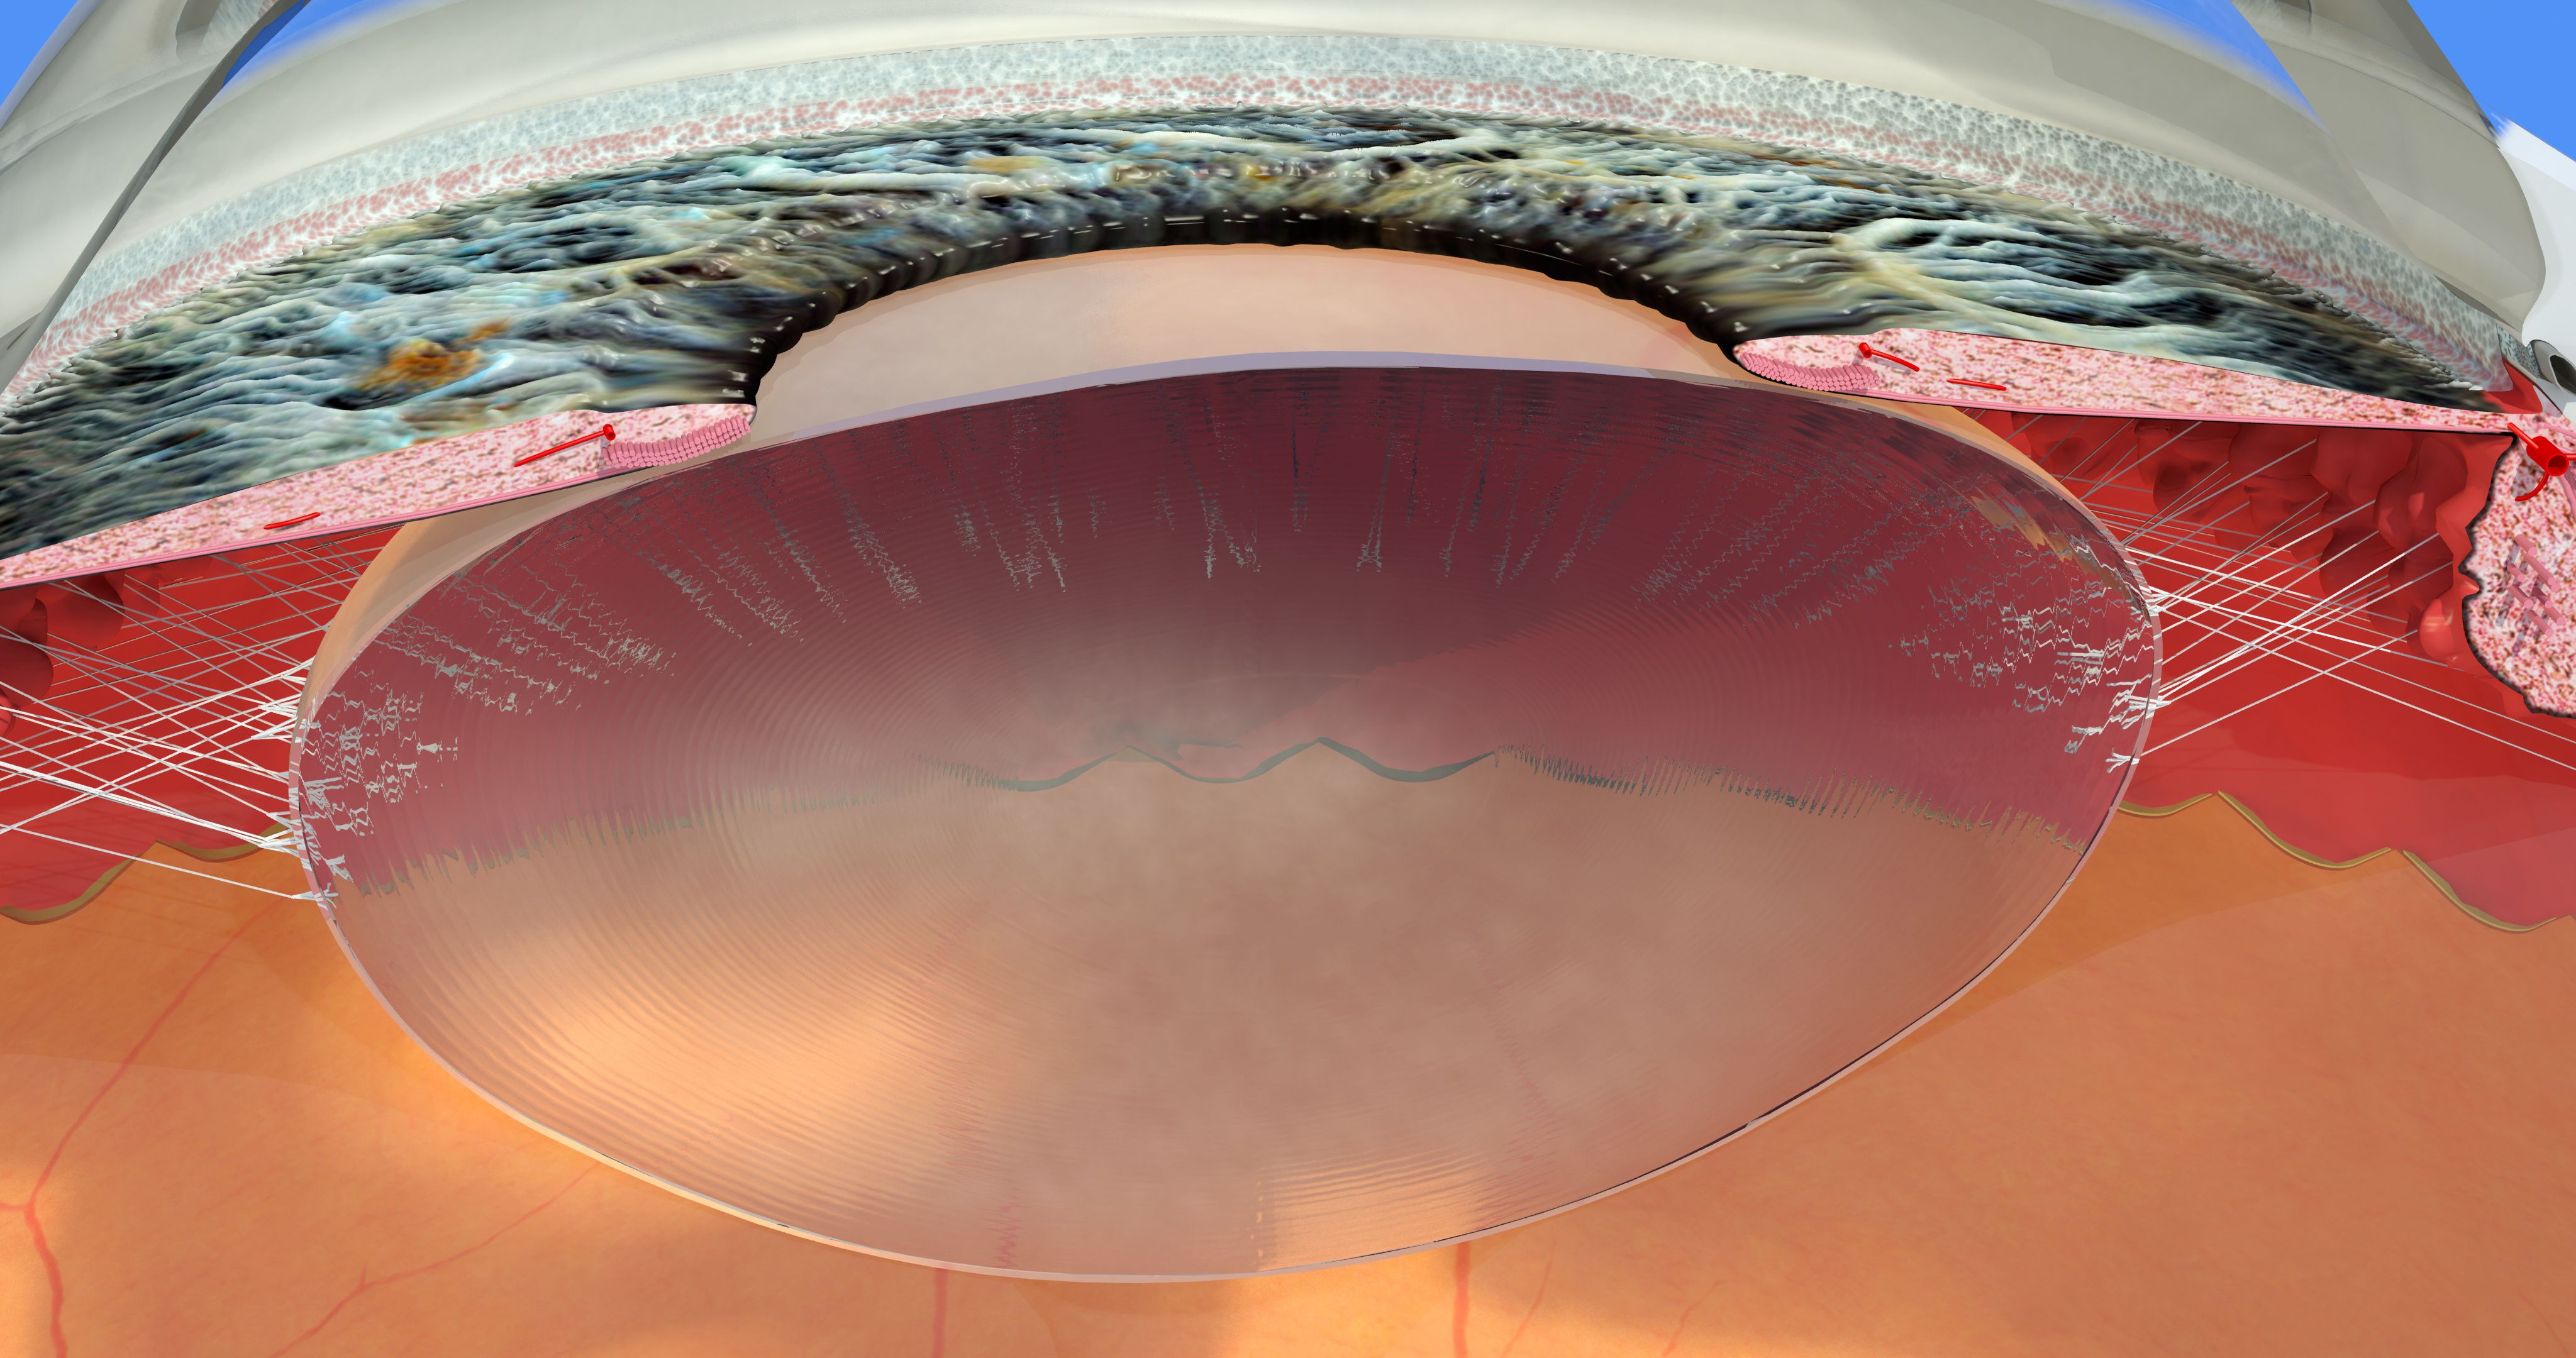 Strategies for managing strabismus after repair of retinal detachments